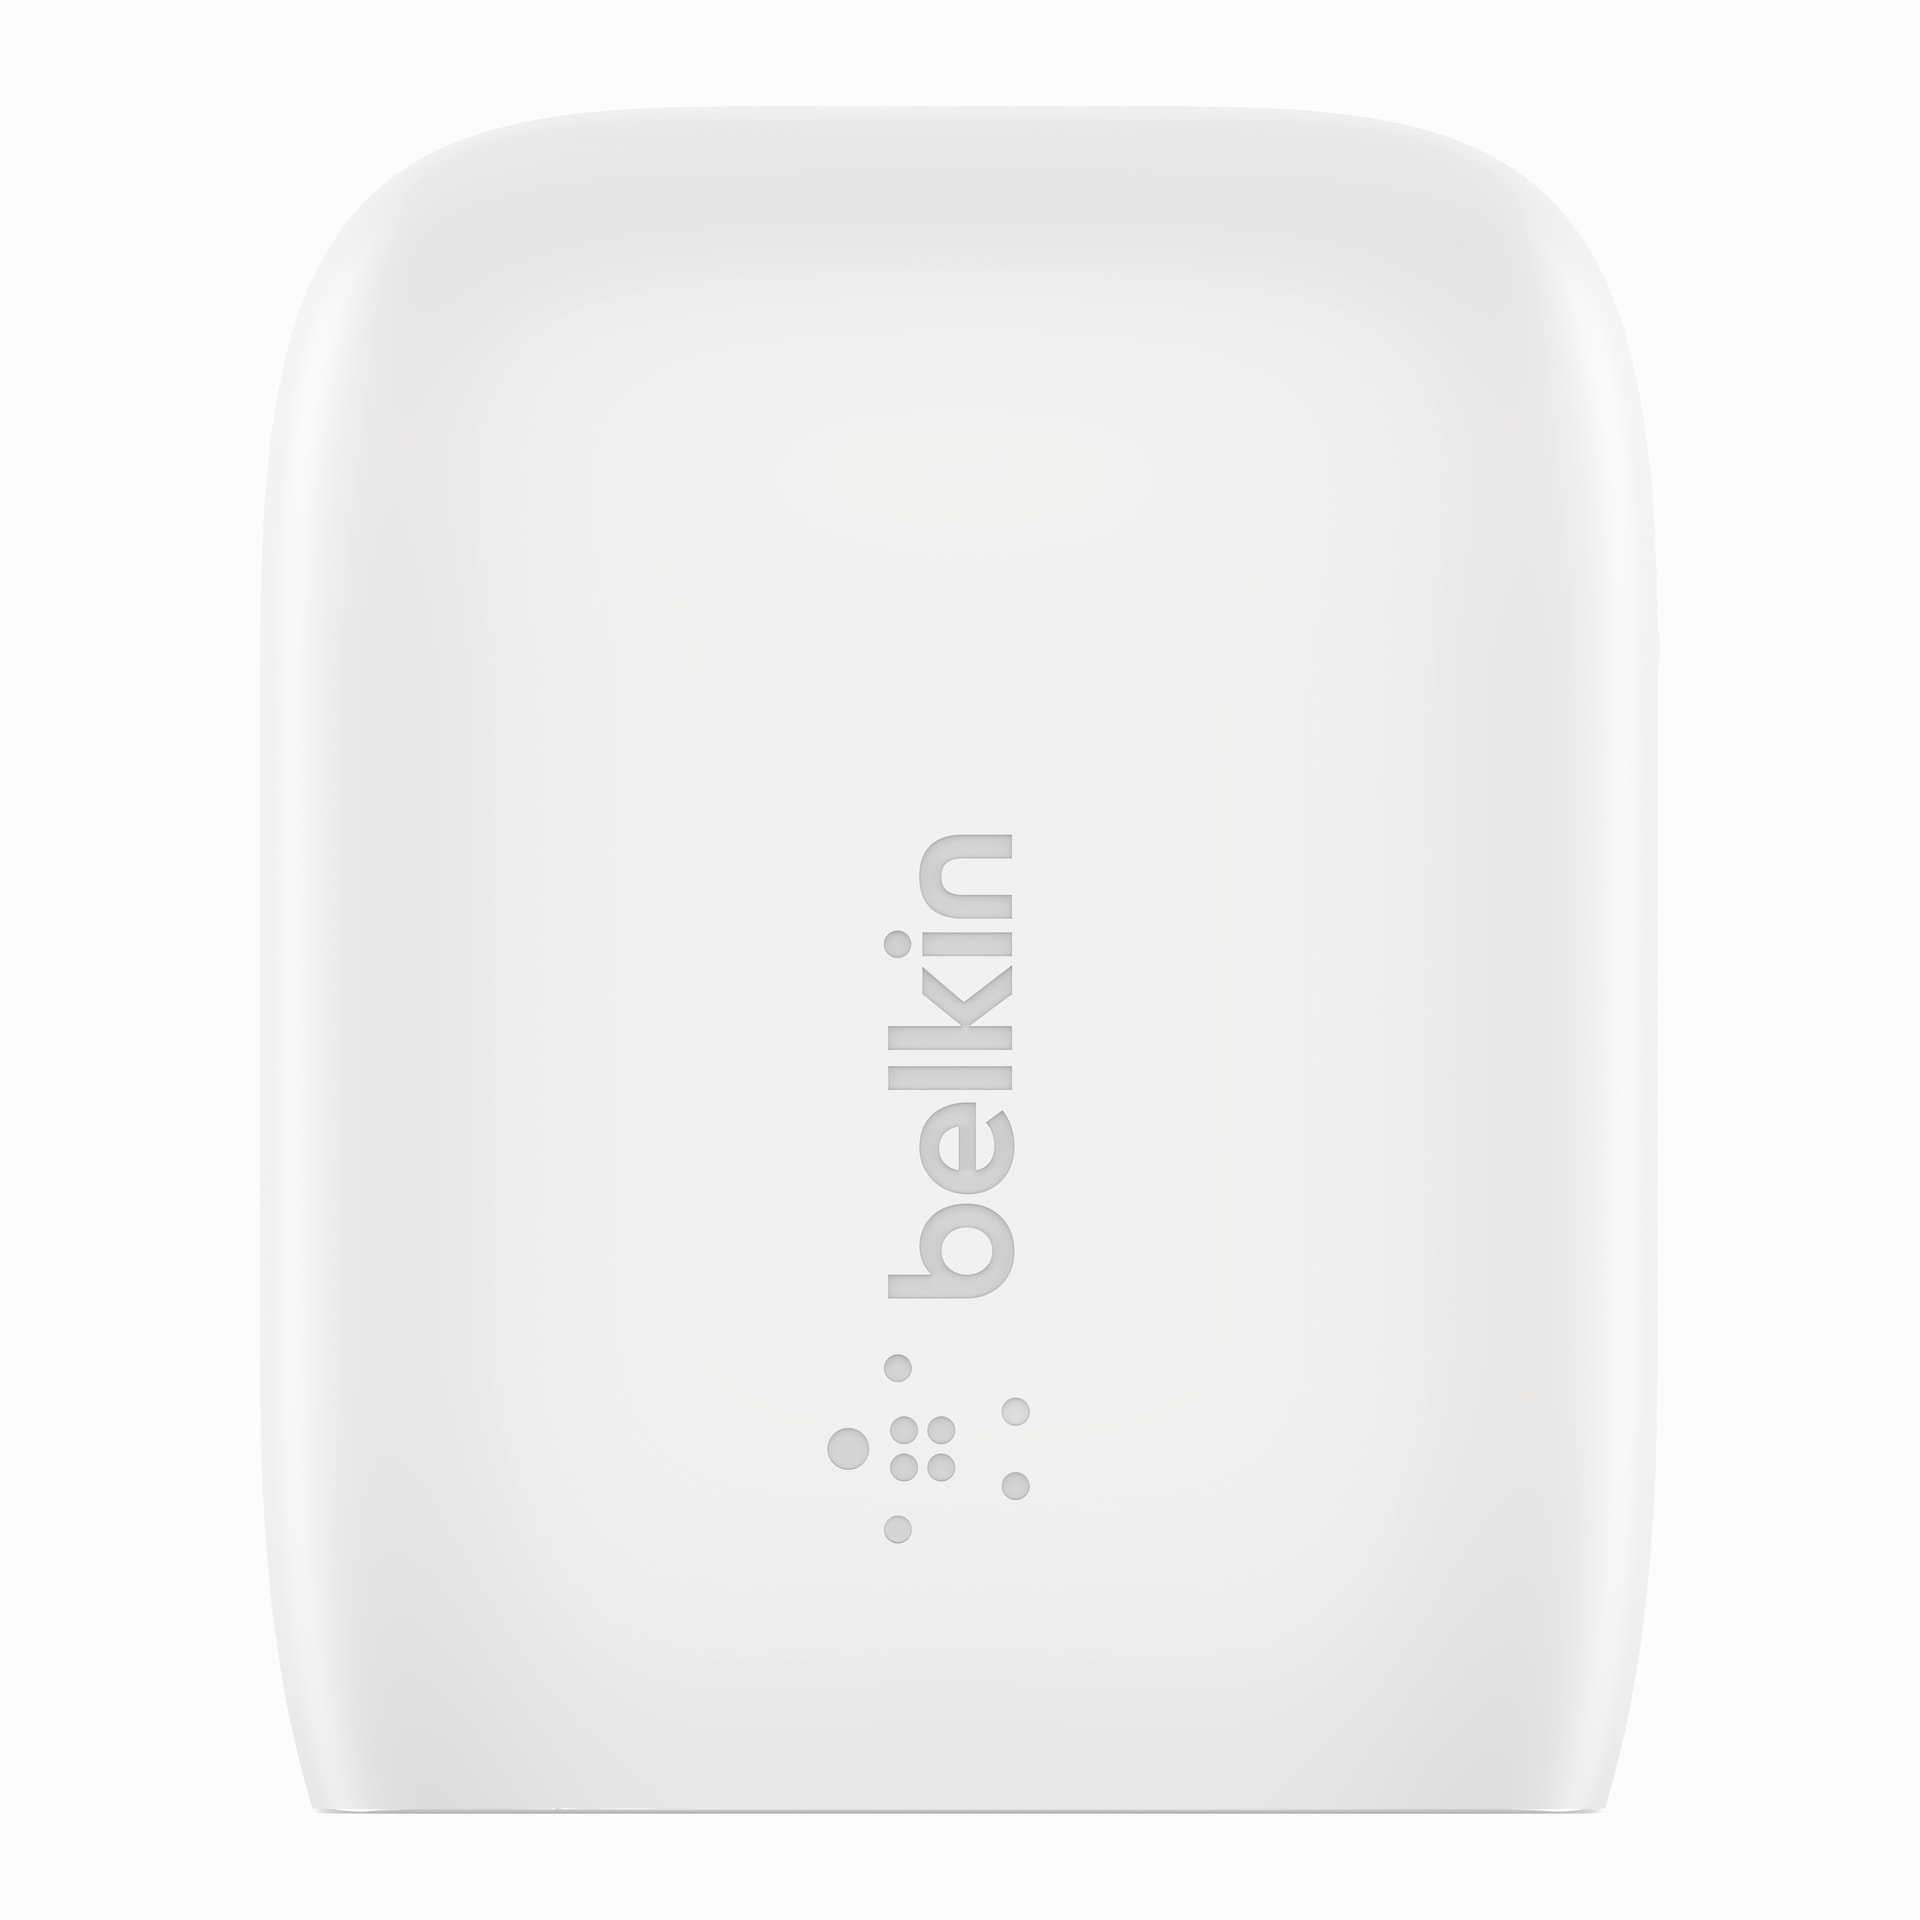 Belkin USB-Ladegerät »BoostCharge 20 Watt USB-C Ladegerät mit Power Delivery 3.1«, (Charger/Netzteil für iPhone, iPad, Samsung Galaxy/Note, Google Pixel)